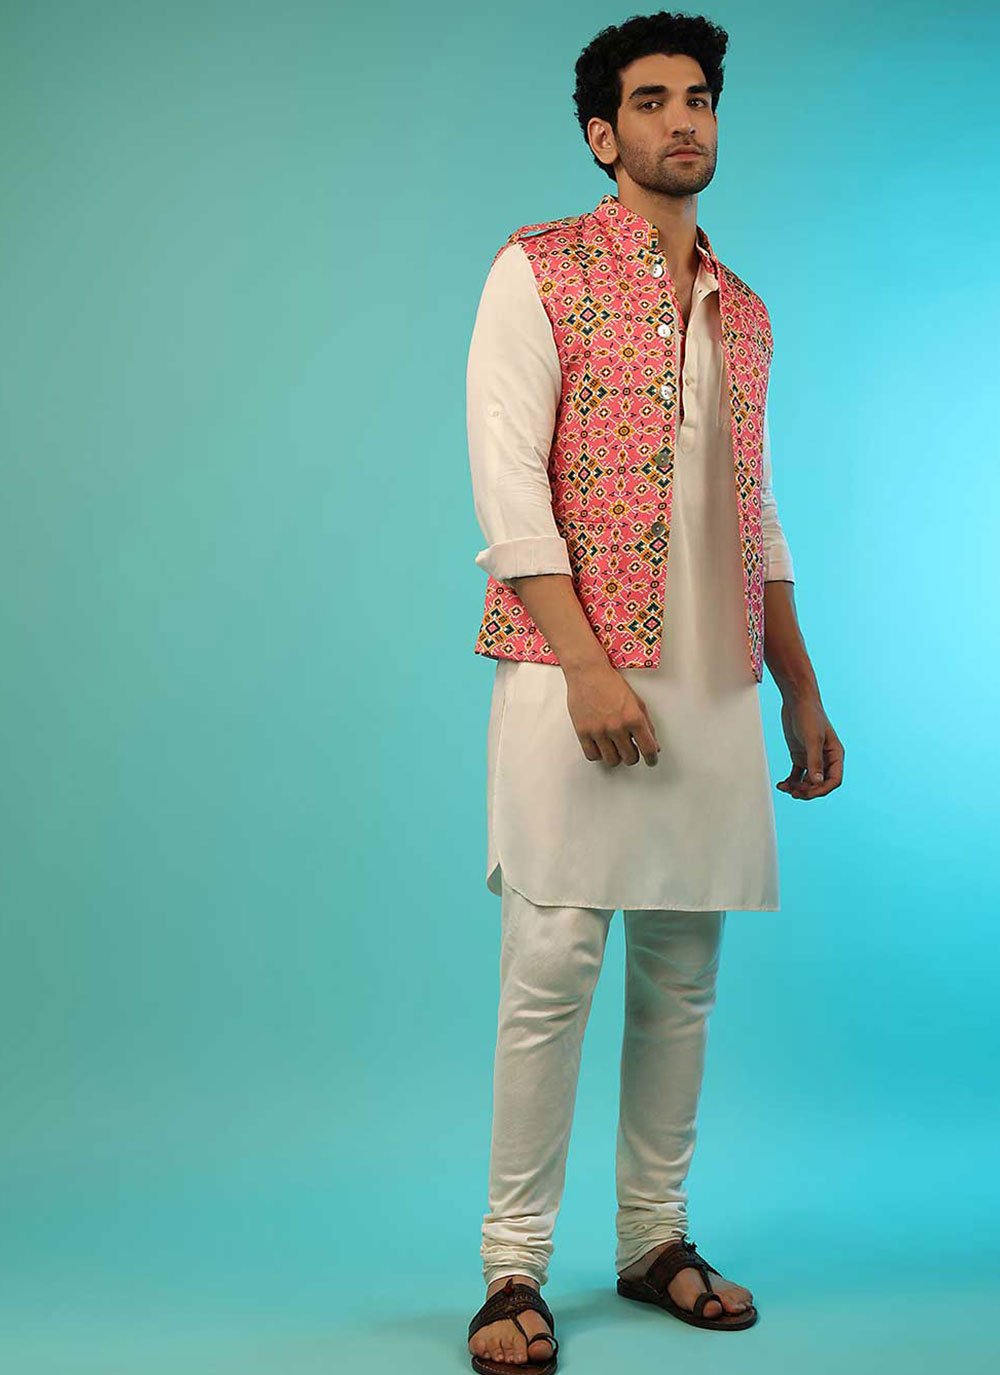 Men's Ethnic Wear Indian Men's Clothing Lashkaraa, 50% OFF